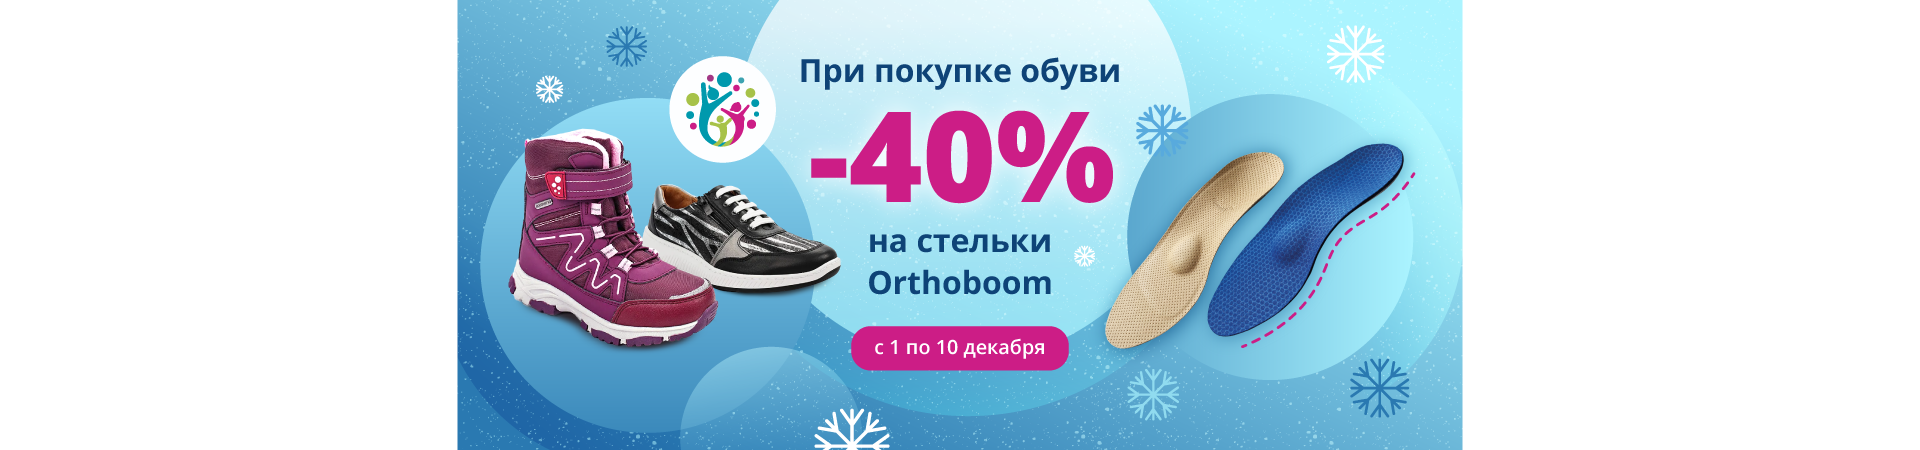 Скидка 40% на стельки Orthoboom при покупке обуви Orthoboom